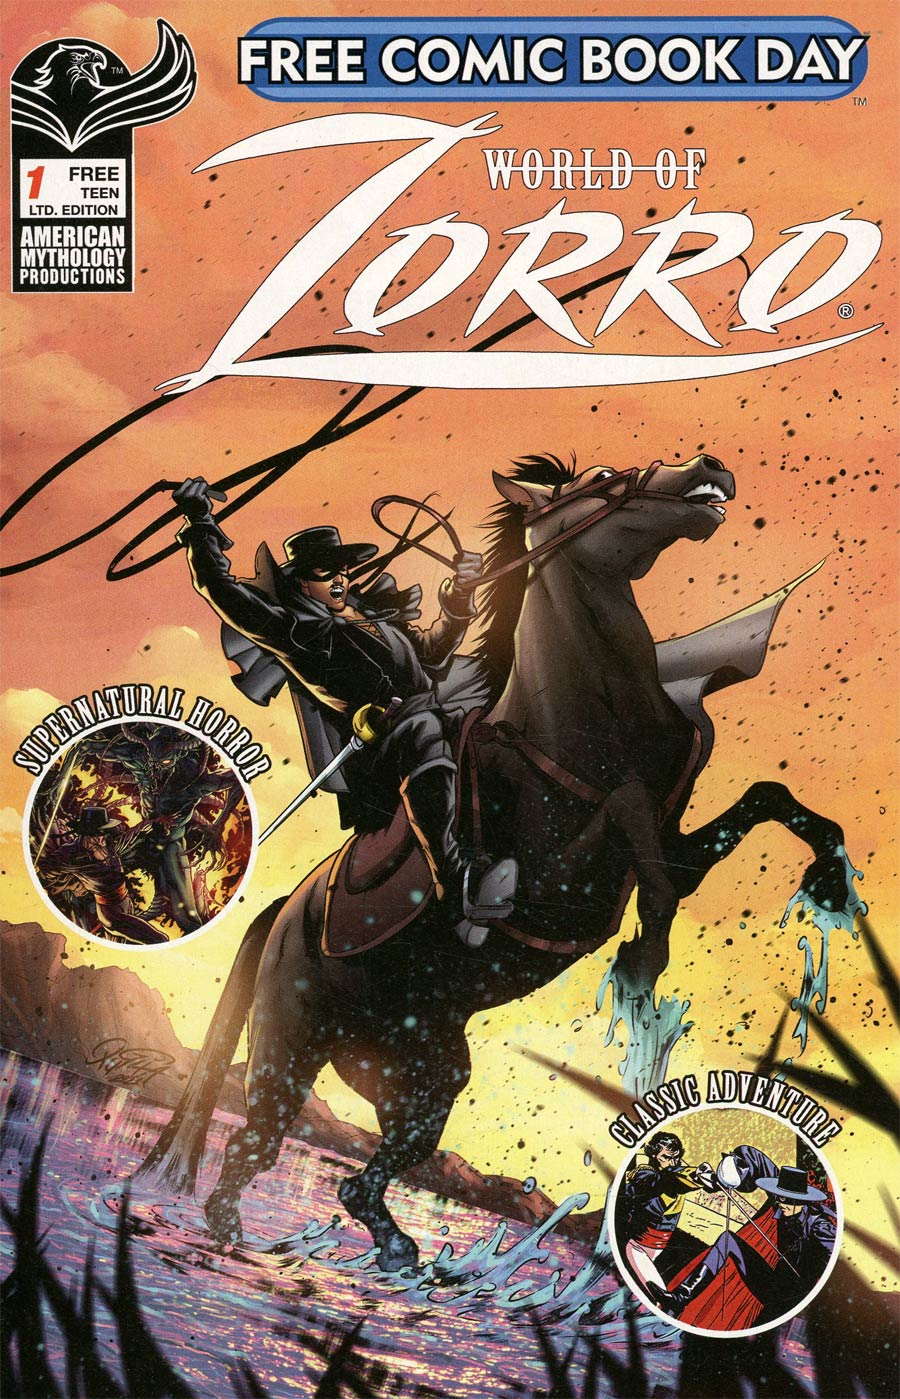 Worlds Of Zorro #1 FCBD 2021 Edition